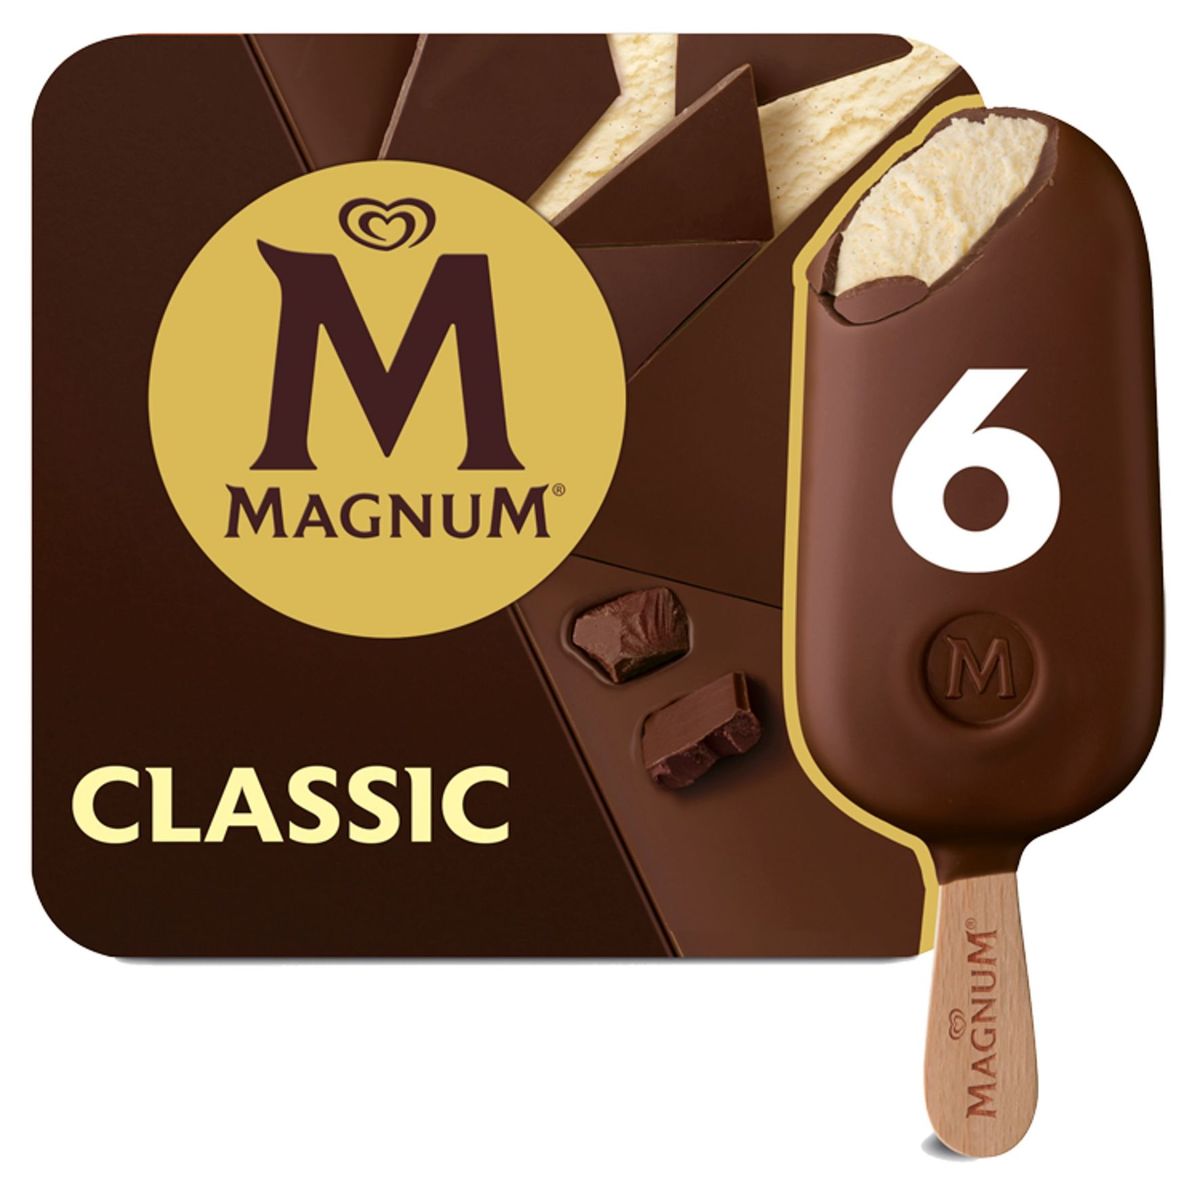 Magnum Ola Ijs Multipack Classic Vanille met Melkchocolade 6 x 110 ml